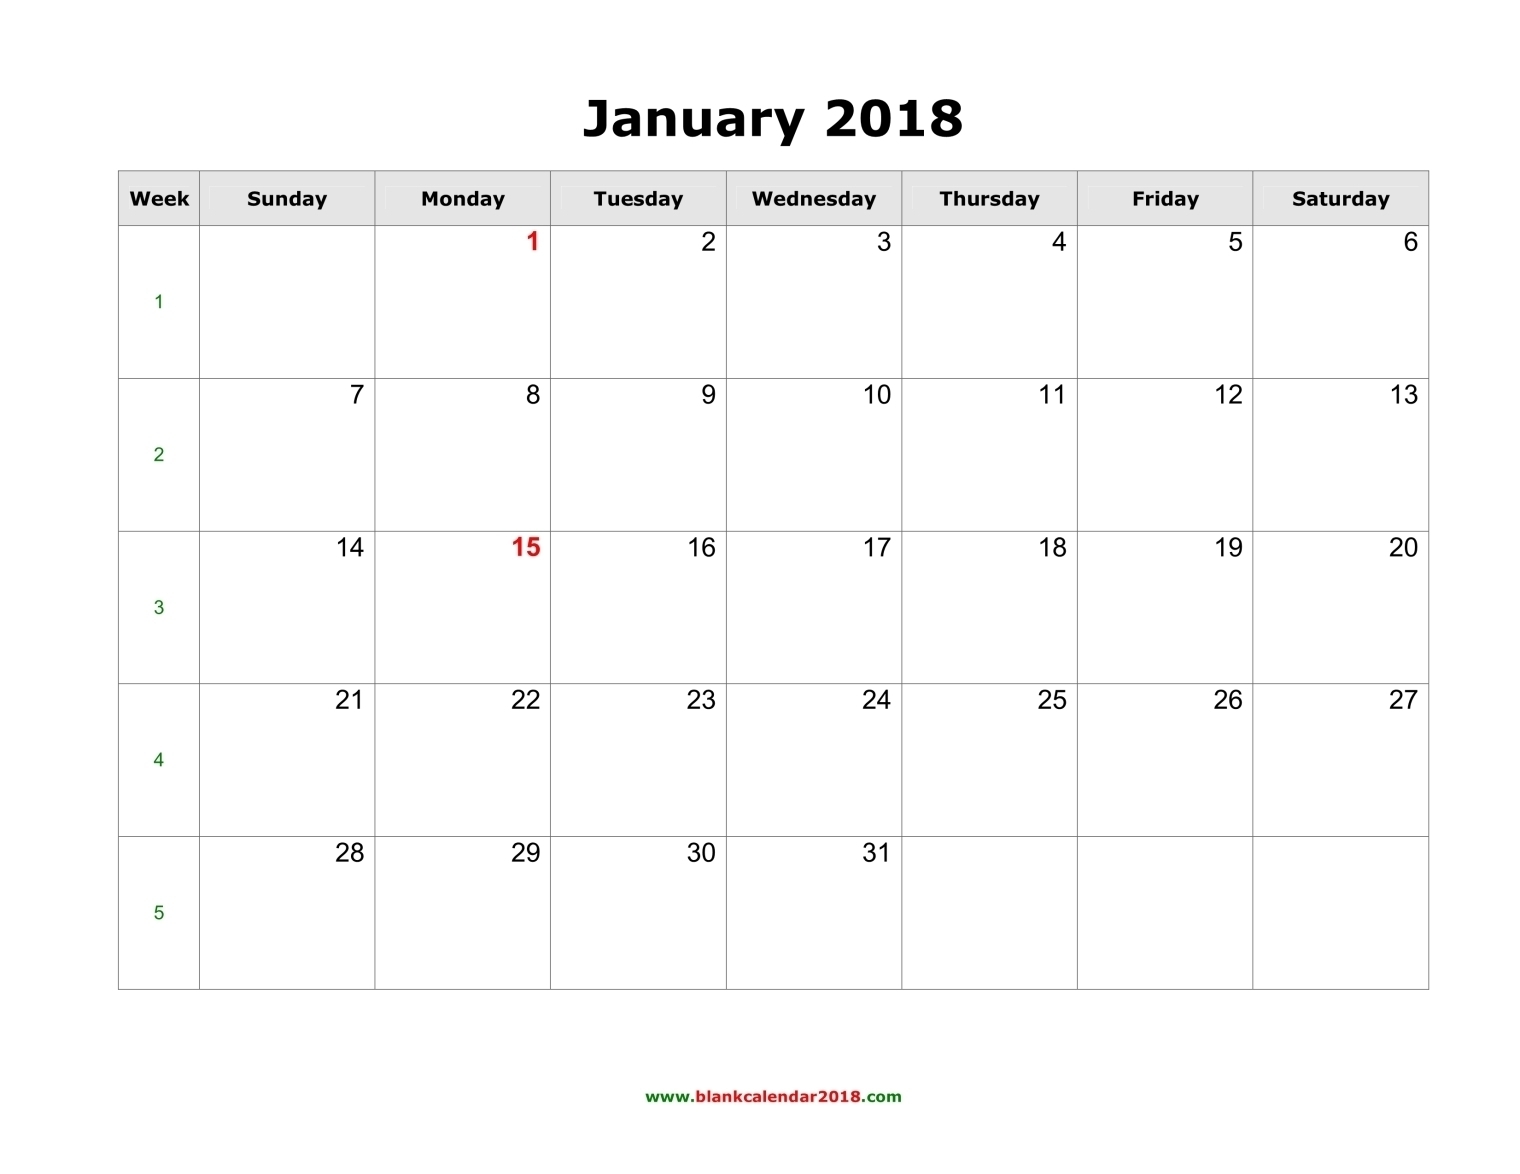 Blank Calendar 2018 intended for Editable Free Blank Monthly Calendar Template